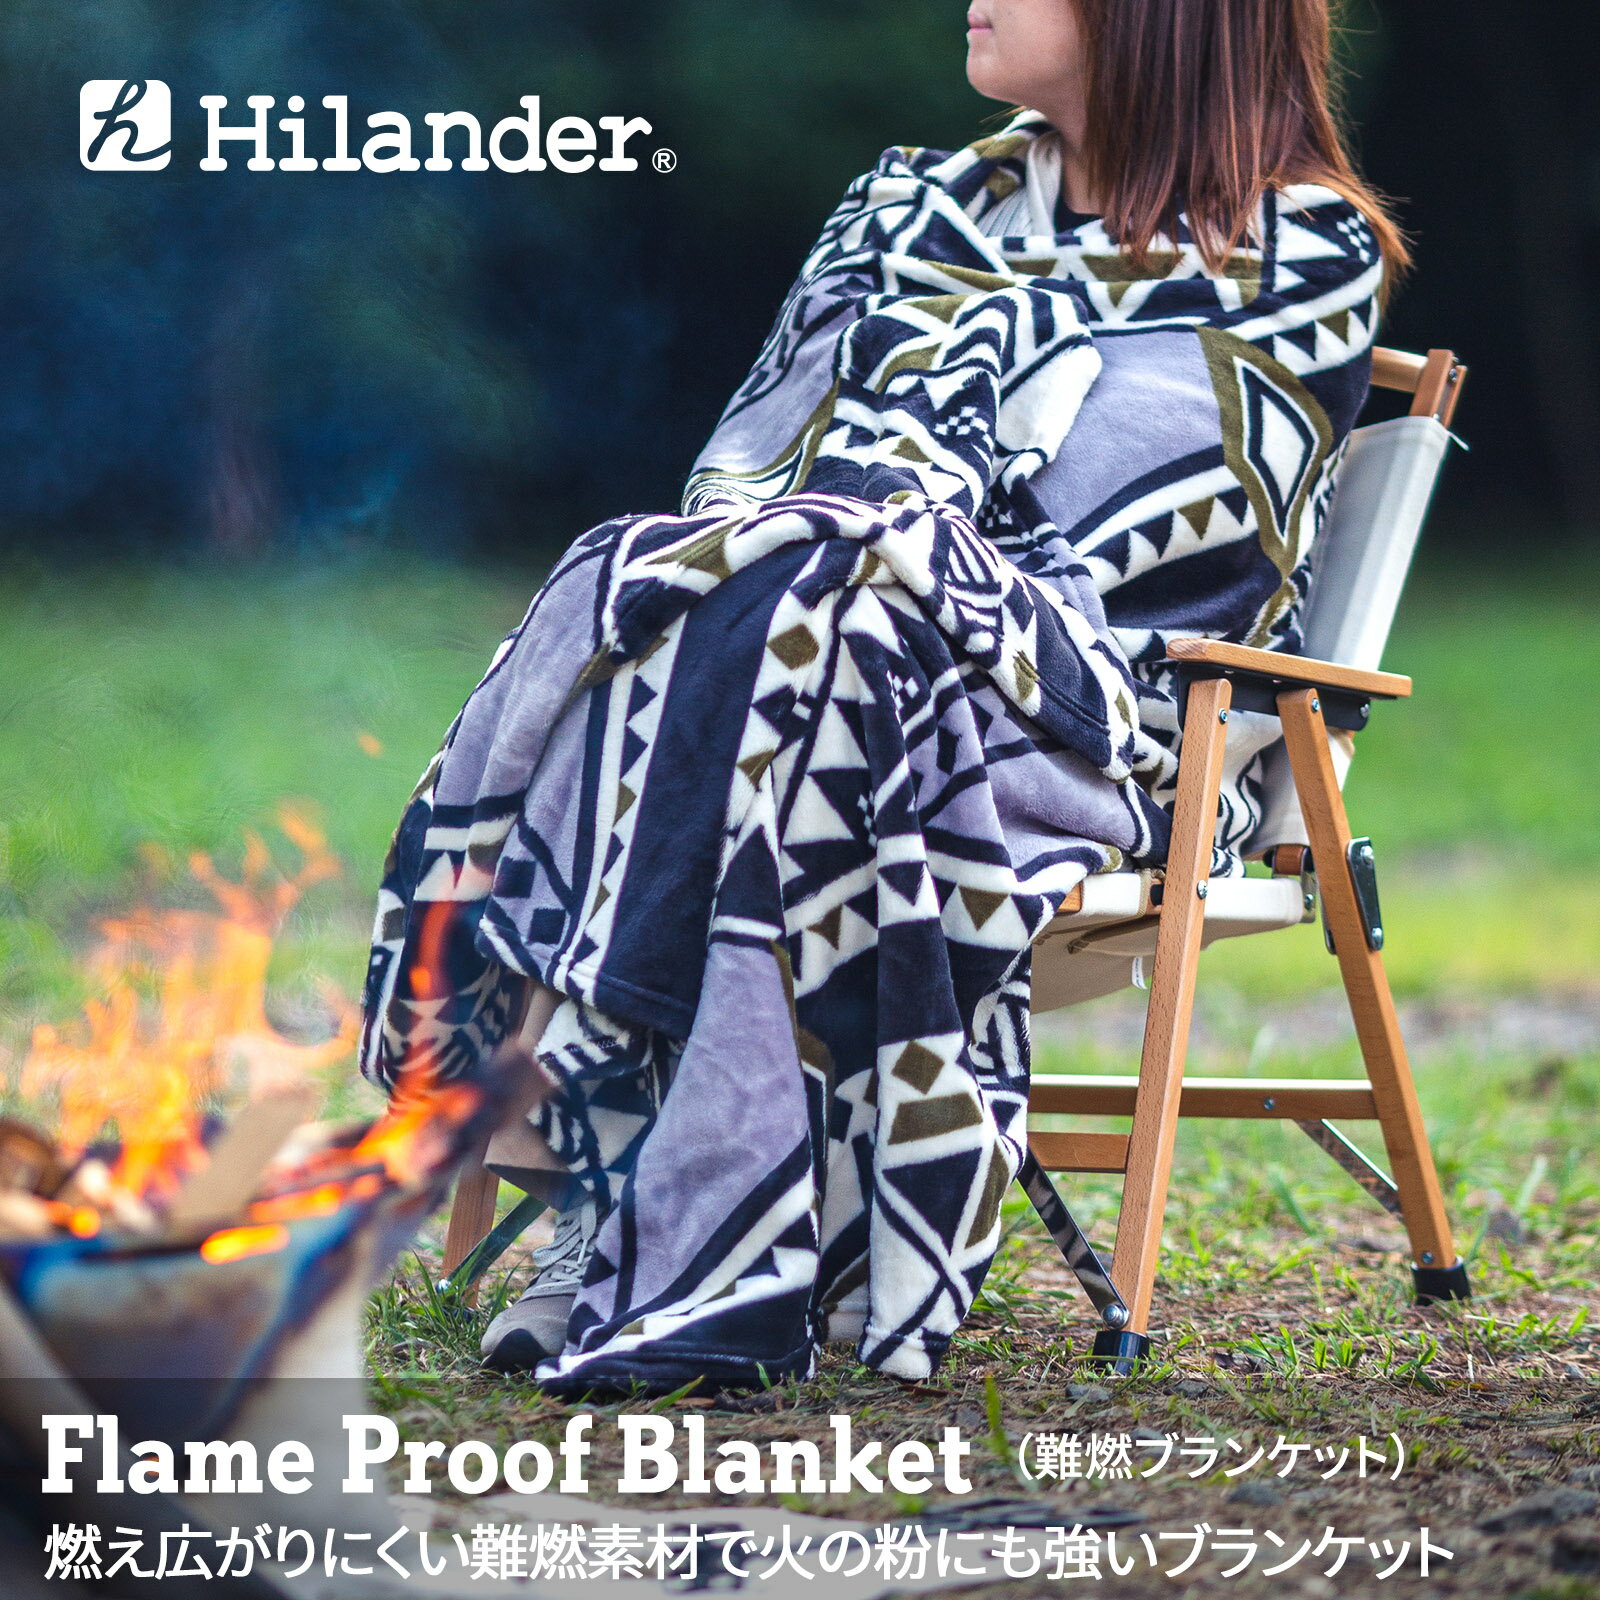 Hilander(ハイランダー) 難燃ブランケット 【1年保証】 トライバル N-012